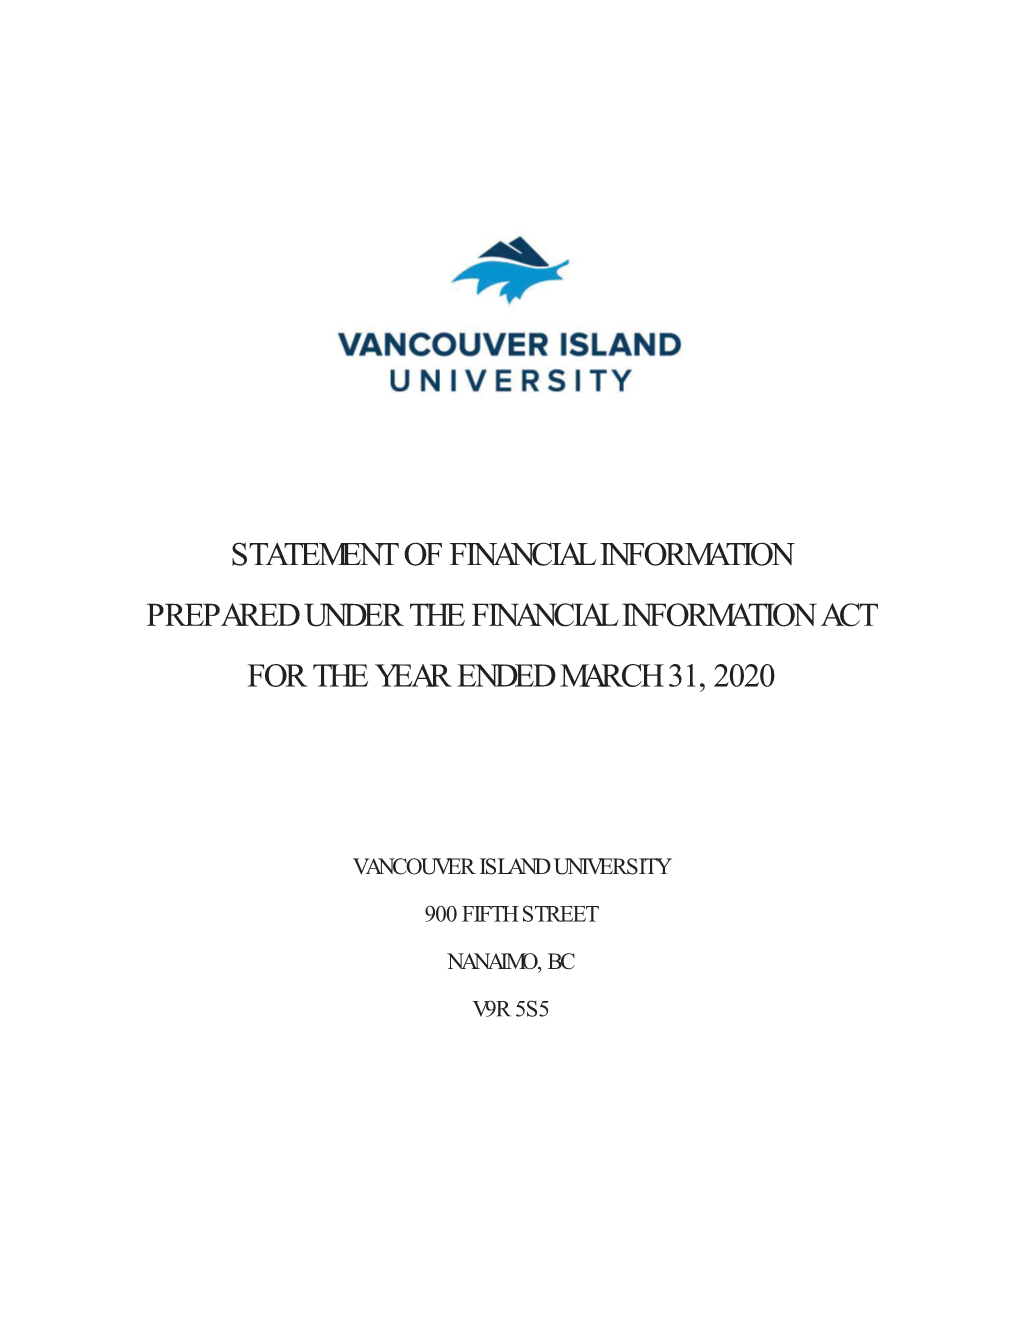 Statement of Financial Information (SOFI) 2019/20